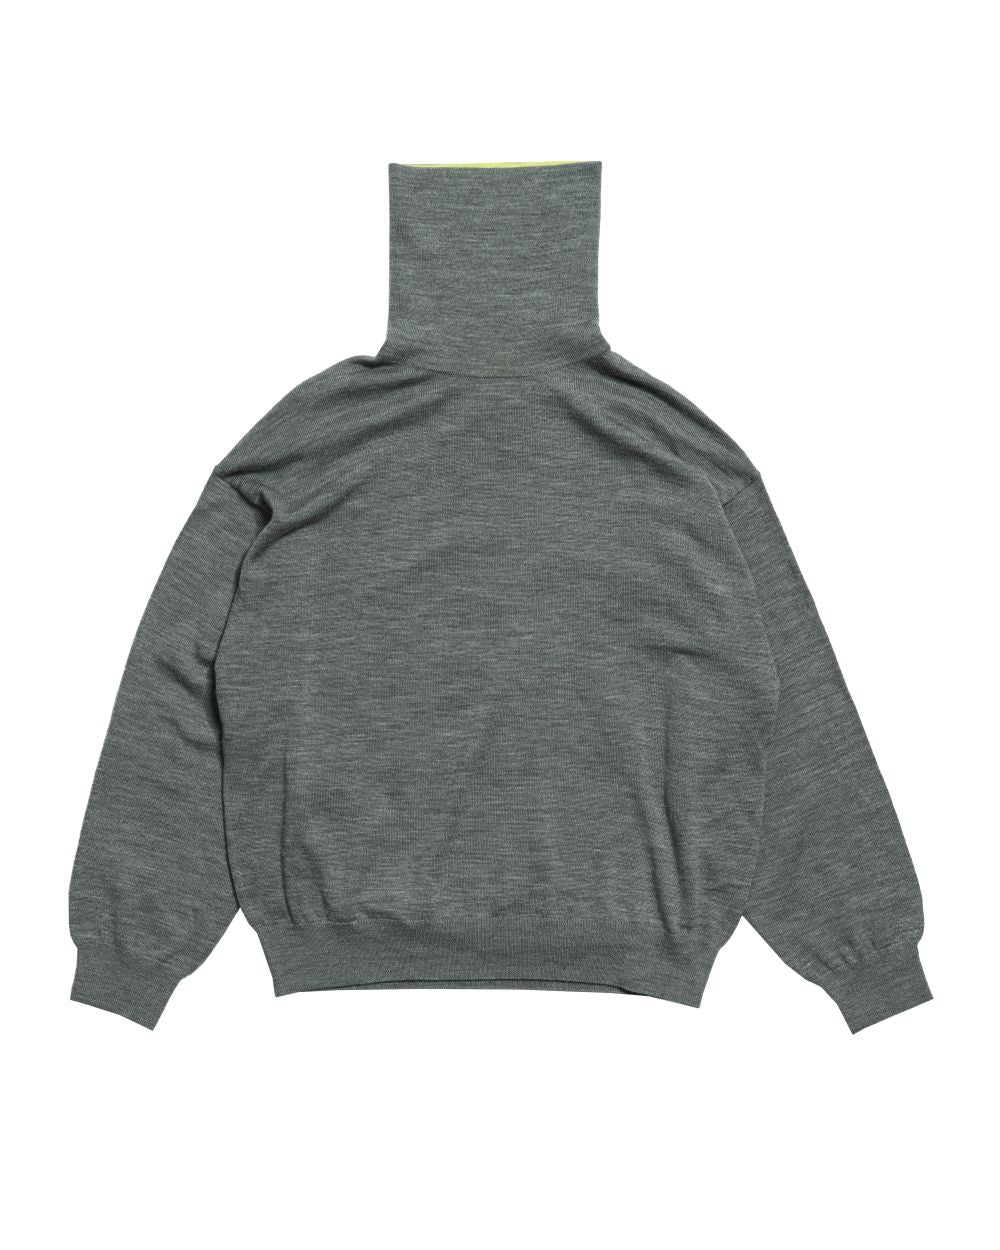 Merino Wool Turtleneck Sweater[M.GRAY]